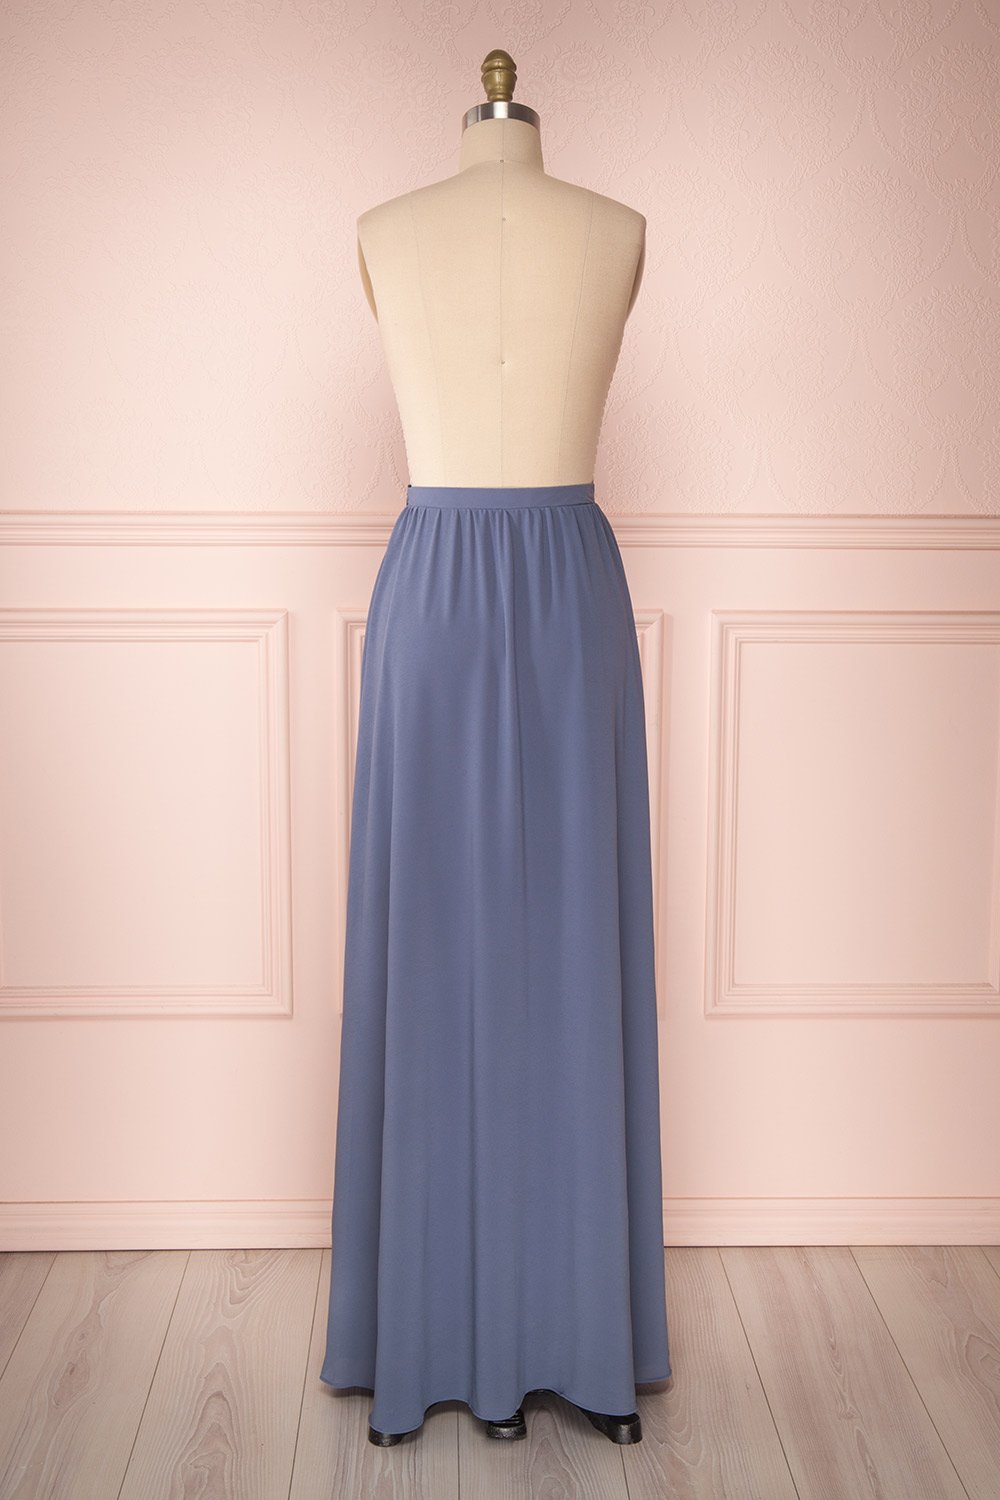 Glykeria Ocean Steel Blue Chiffon Maxi Skirt | Boutique 1861 6